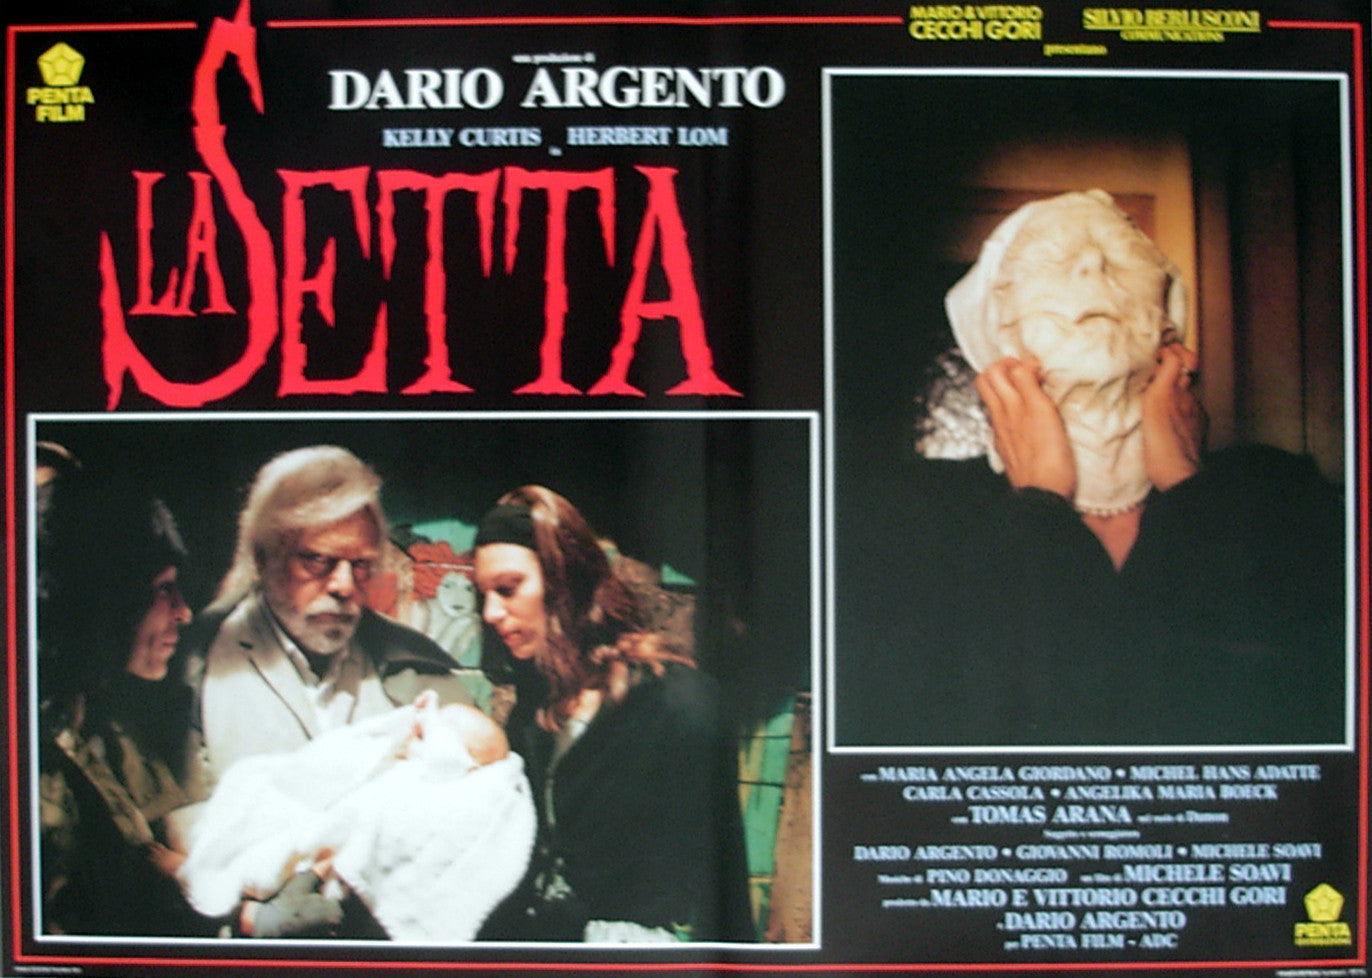 DEVIL'S DAUGHTER, THE - Italian photobusta poster